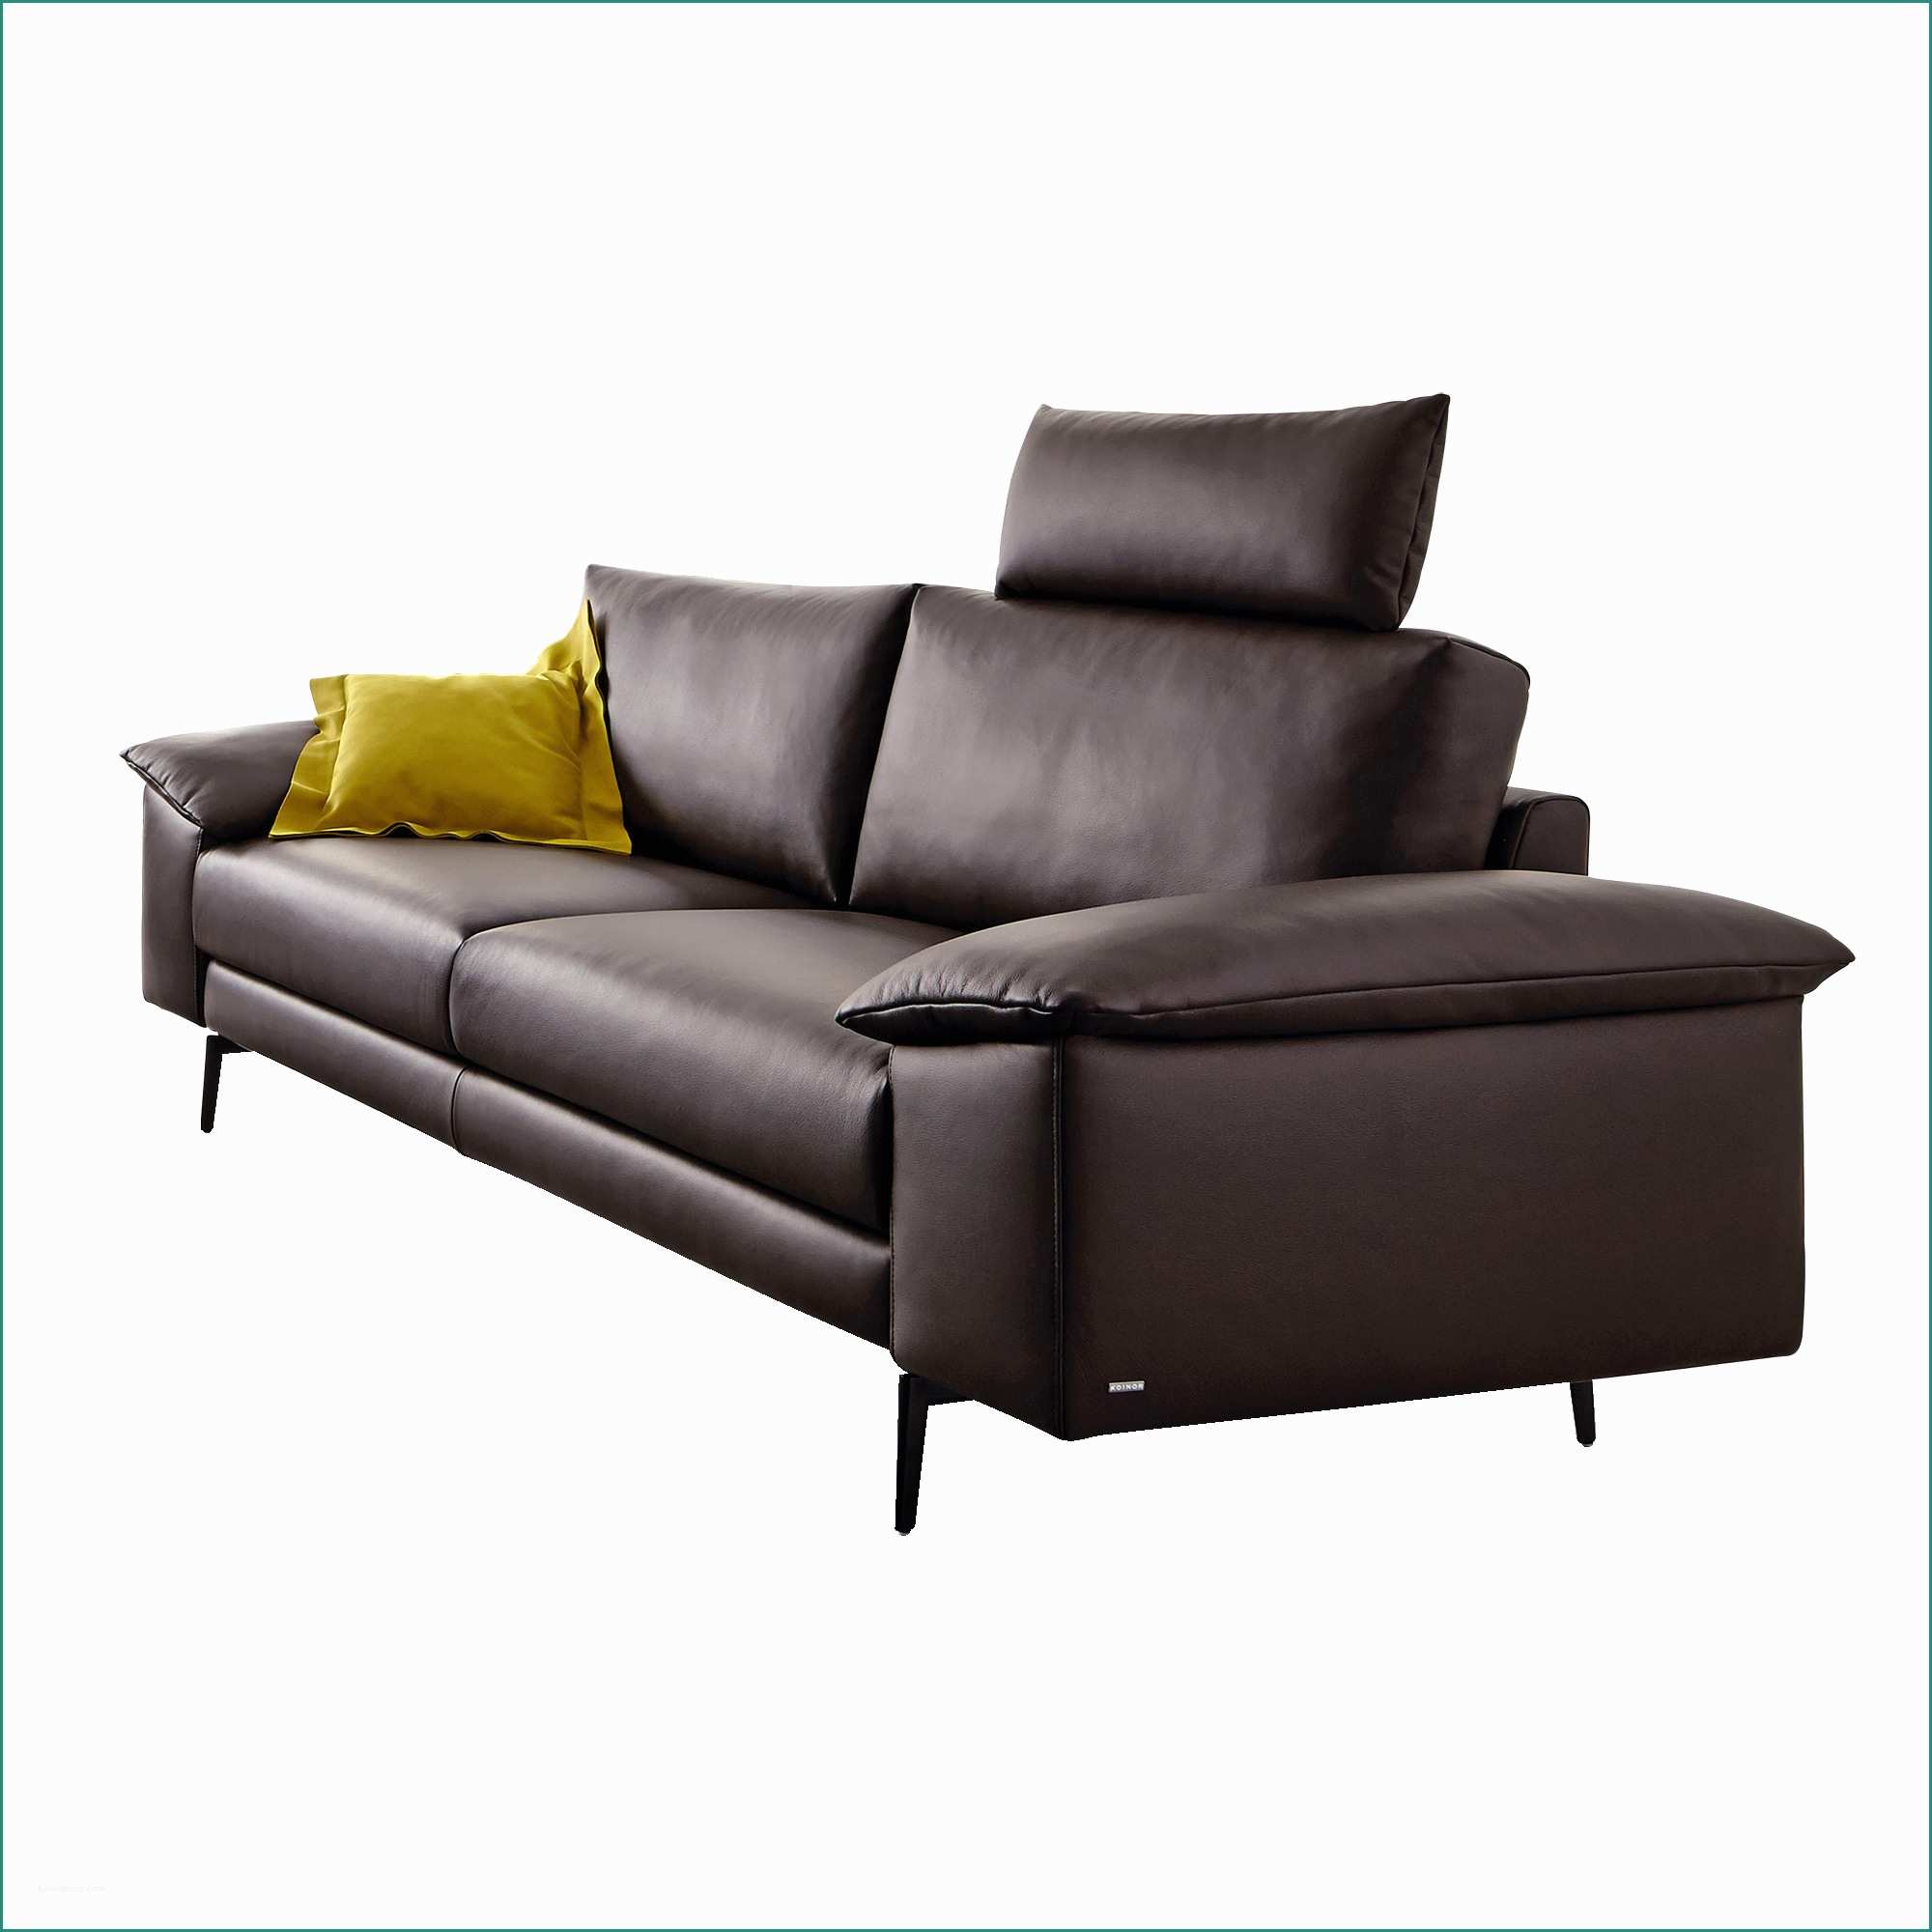 Poltrone E sofa Corsico E Mondo sofa Erfahrungen Luxus Dark Grey Leather Doll sofa 1 6 Scale